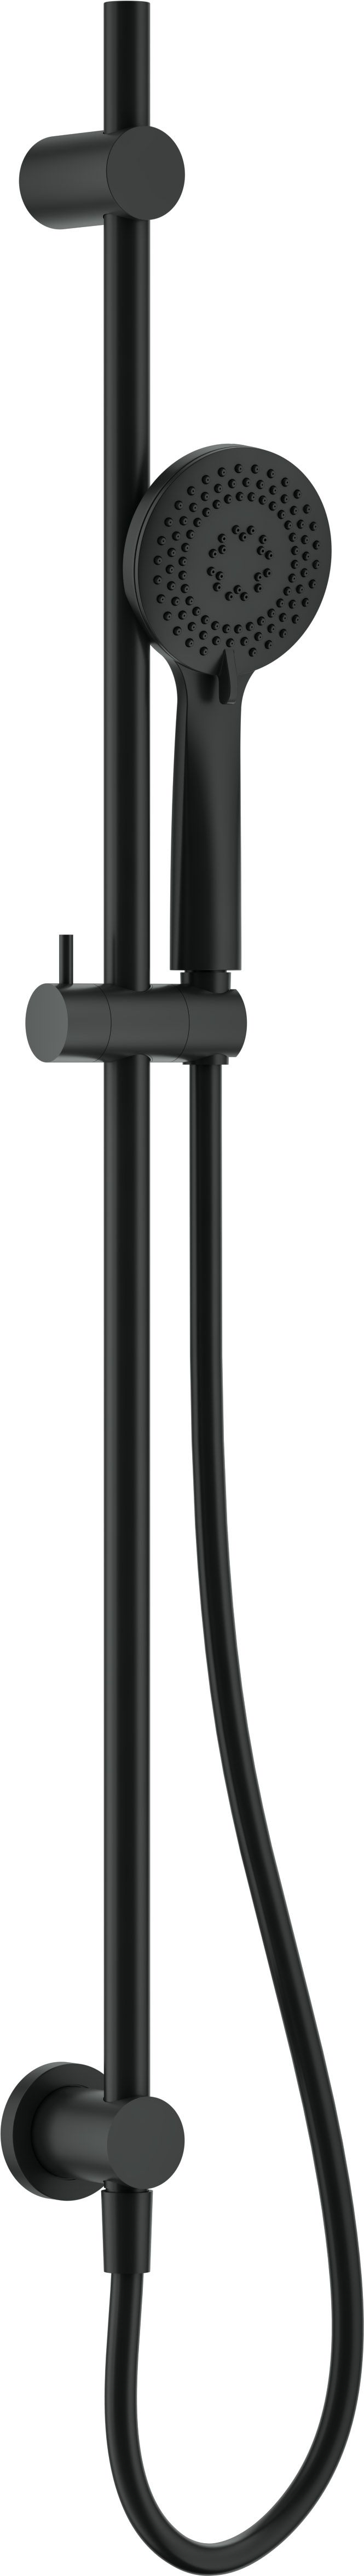 Shower set, 3-function, with sliding bar - concealed connector - NQA_N61K - Główne zdjęcie produktowe